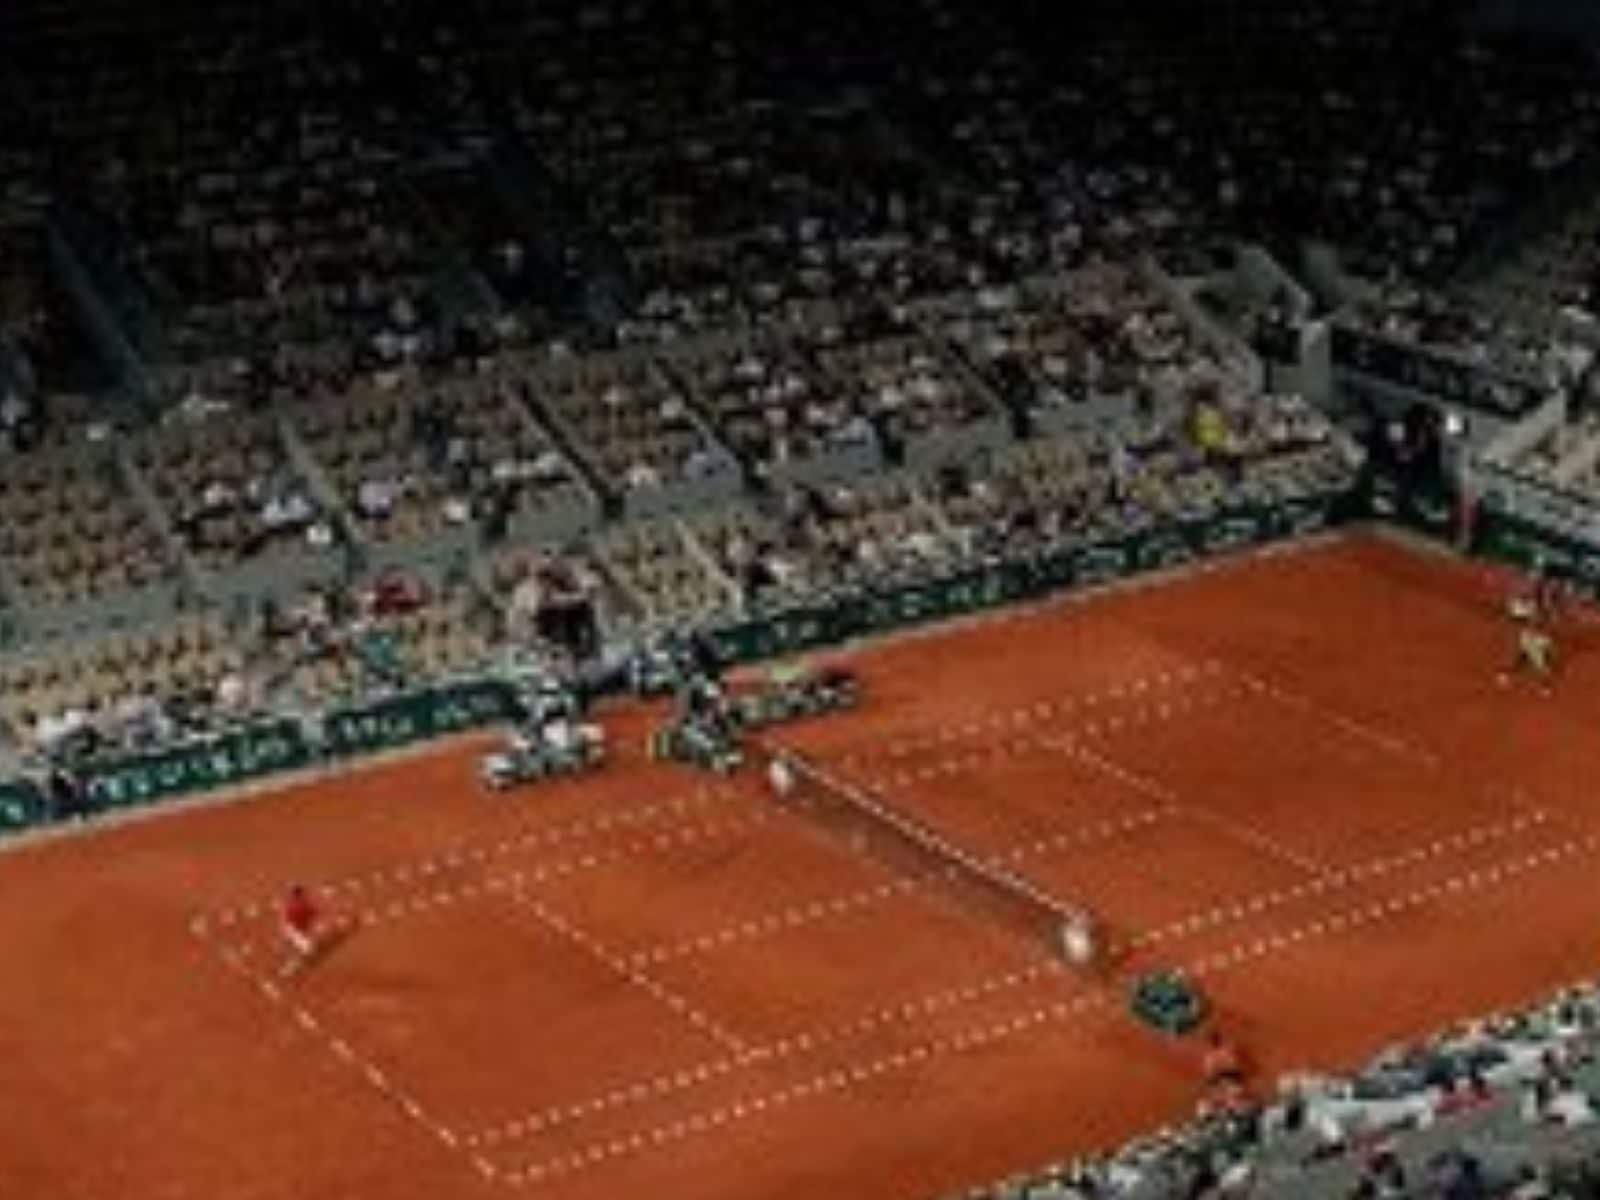 Tennis news: Australian Open introduces final-set tiebreaks for